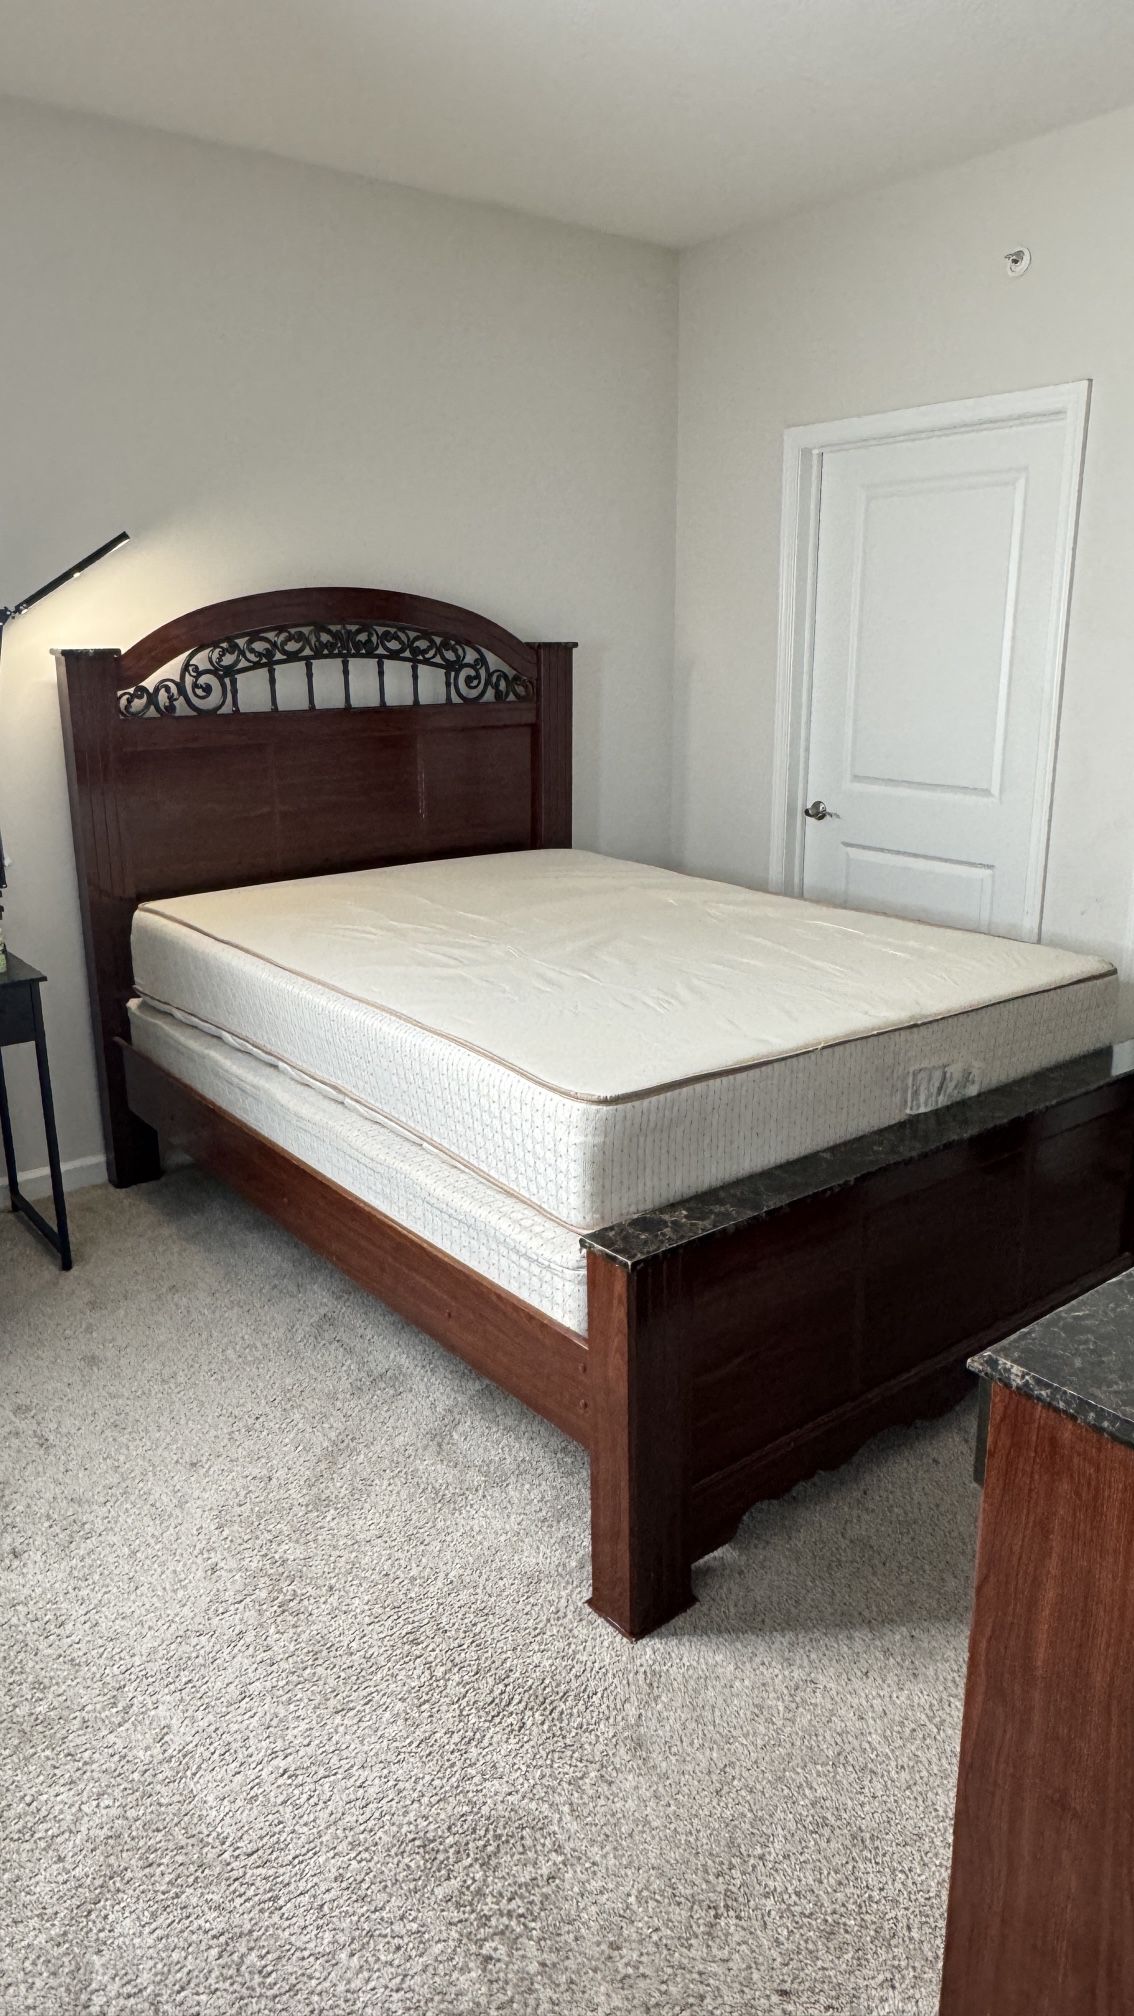 4-piece bed set, $700, Gently Used- Good Condition, Please Read Description!!